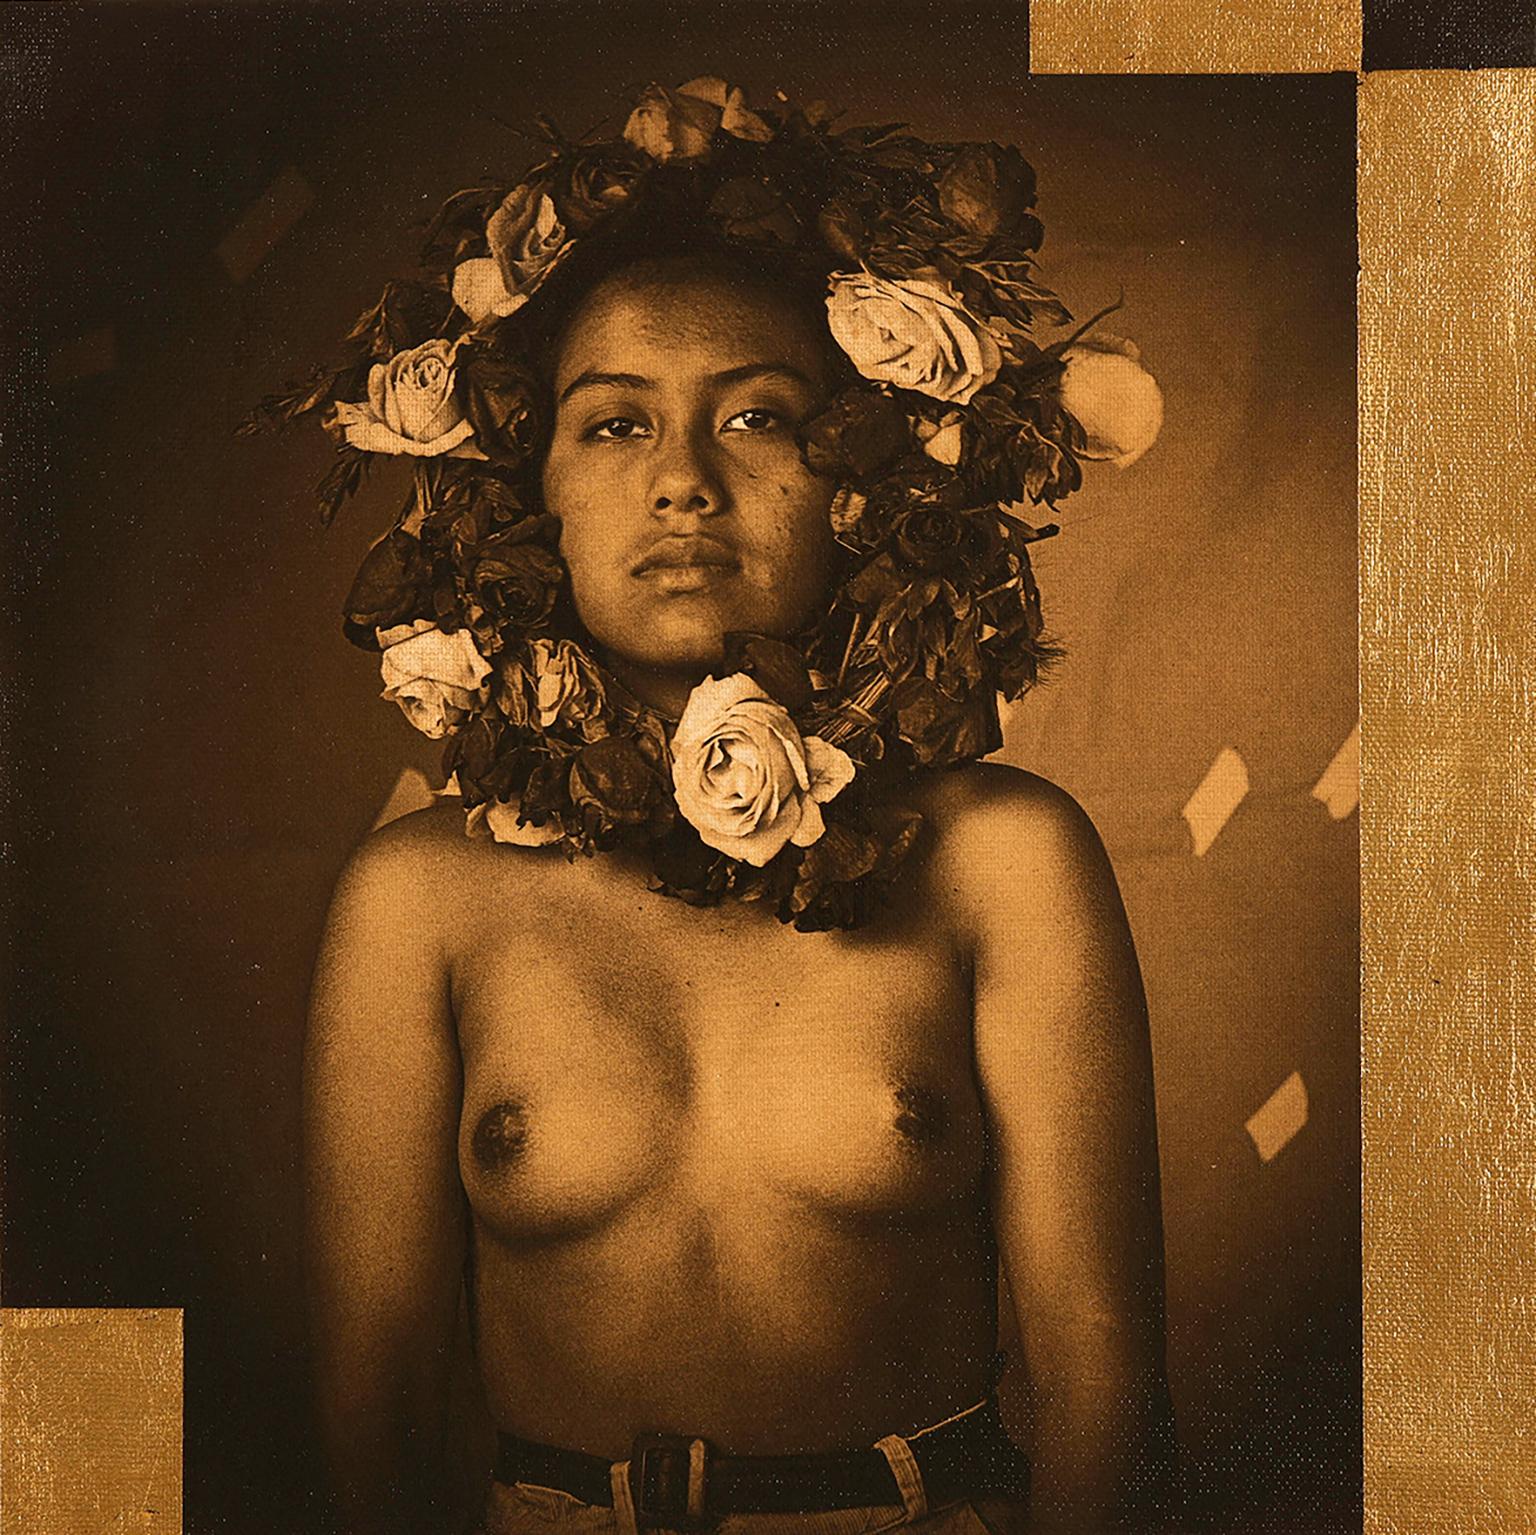 Luis Gonzalez Palma Portrait Photograph – „Mobius (La Rosa)“ Fotografie auf Leinwand, Porträt einer Frau mit Rosenkranz